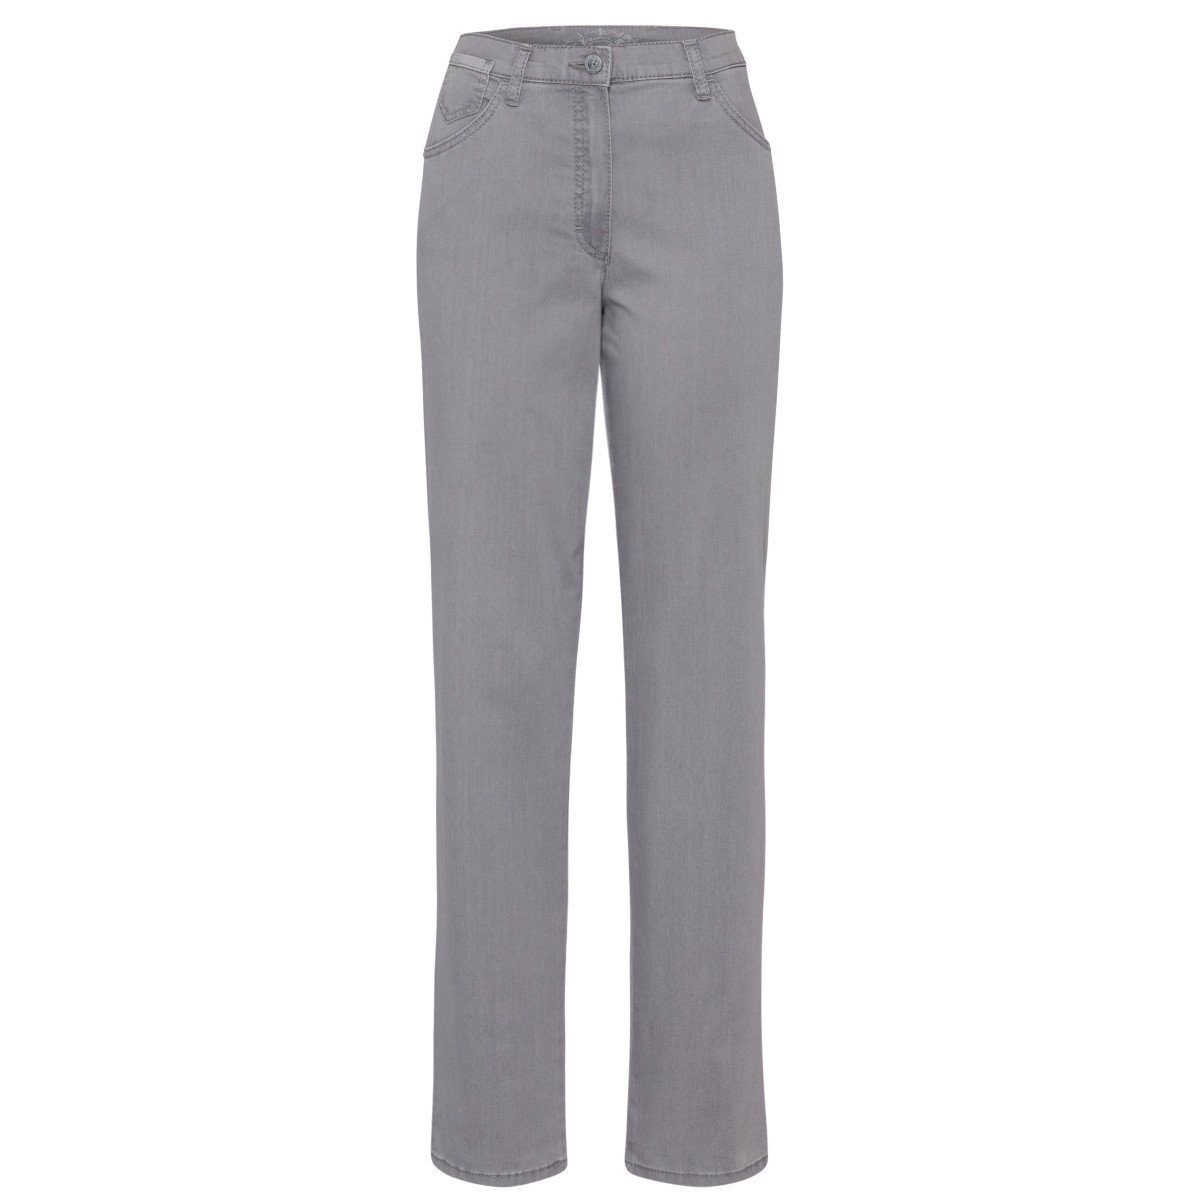 RAPHAELA by BRAX 5-Pocket-Jeans »Corry Fay Comfort Plus« COMFORT FIT online  kaufen | OTTO